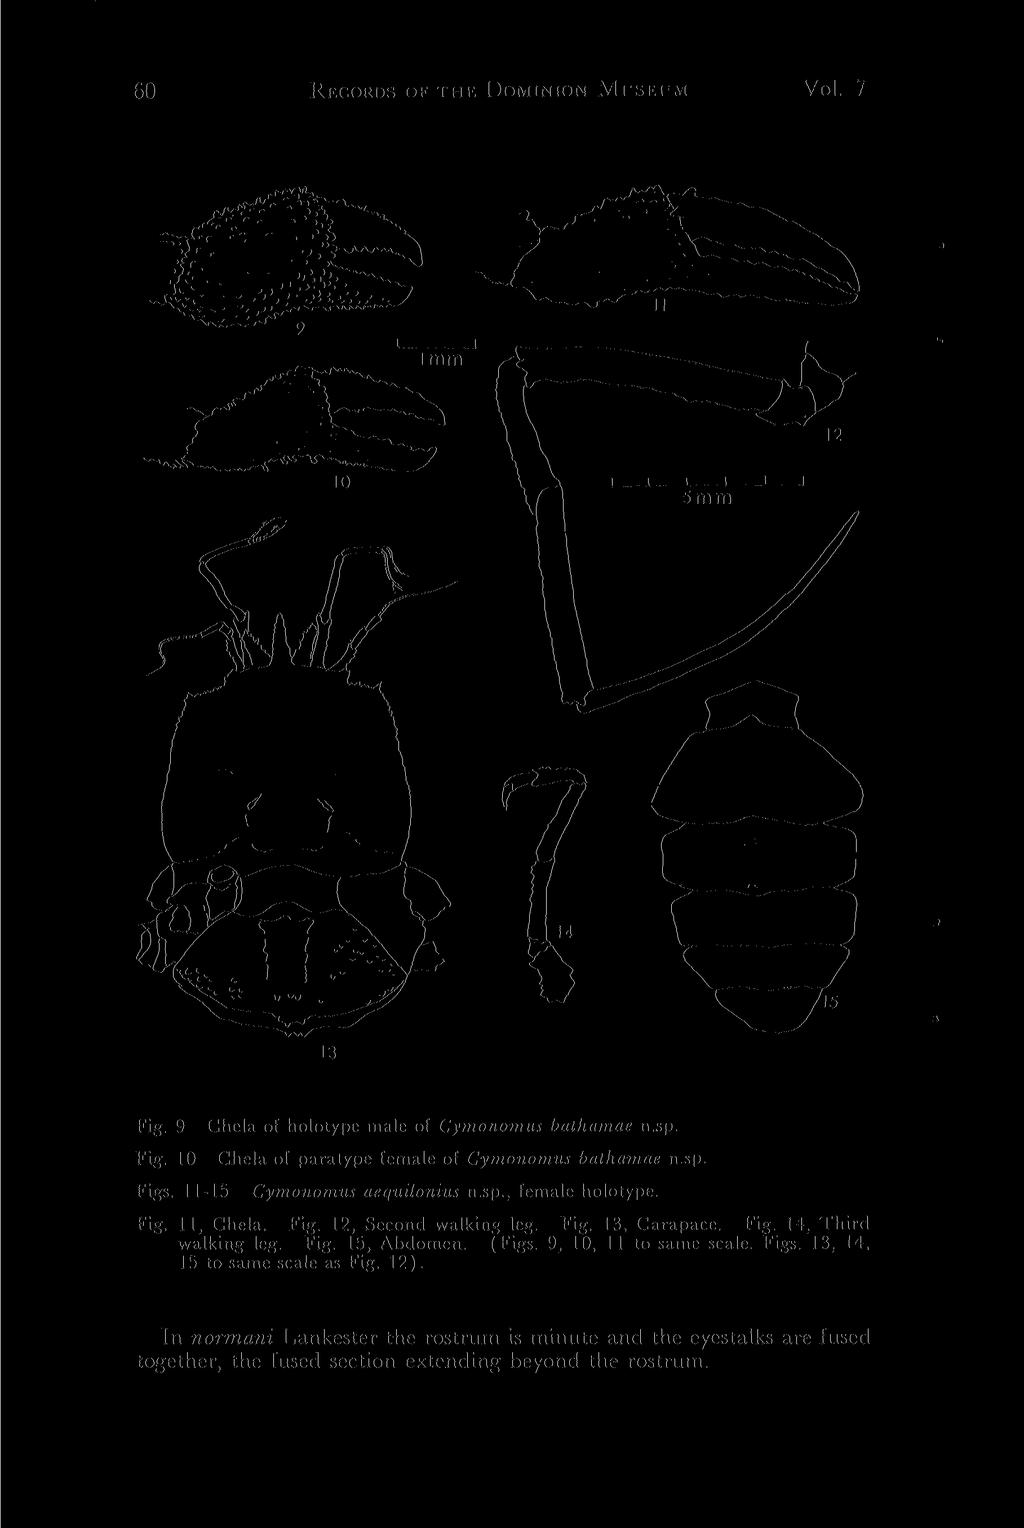 60 RECORDS OF THE DOMINION MUSEUM Vol. 7 Fig. 9 Chela of holotype male of Cynnonomus batharnae n.sp. Fig. 10 Chela of paratype female of Cymonomus batharnae n.sp. Figs. 11-15 Cymonomus aequilonius n.